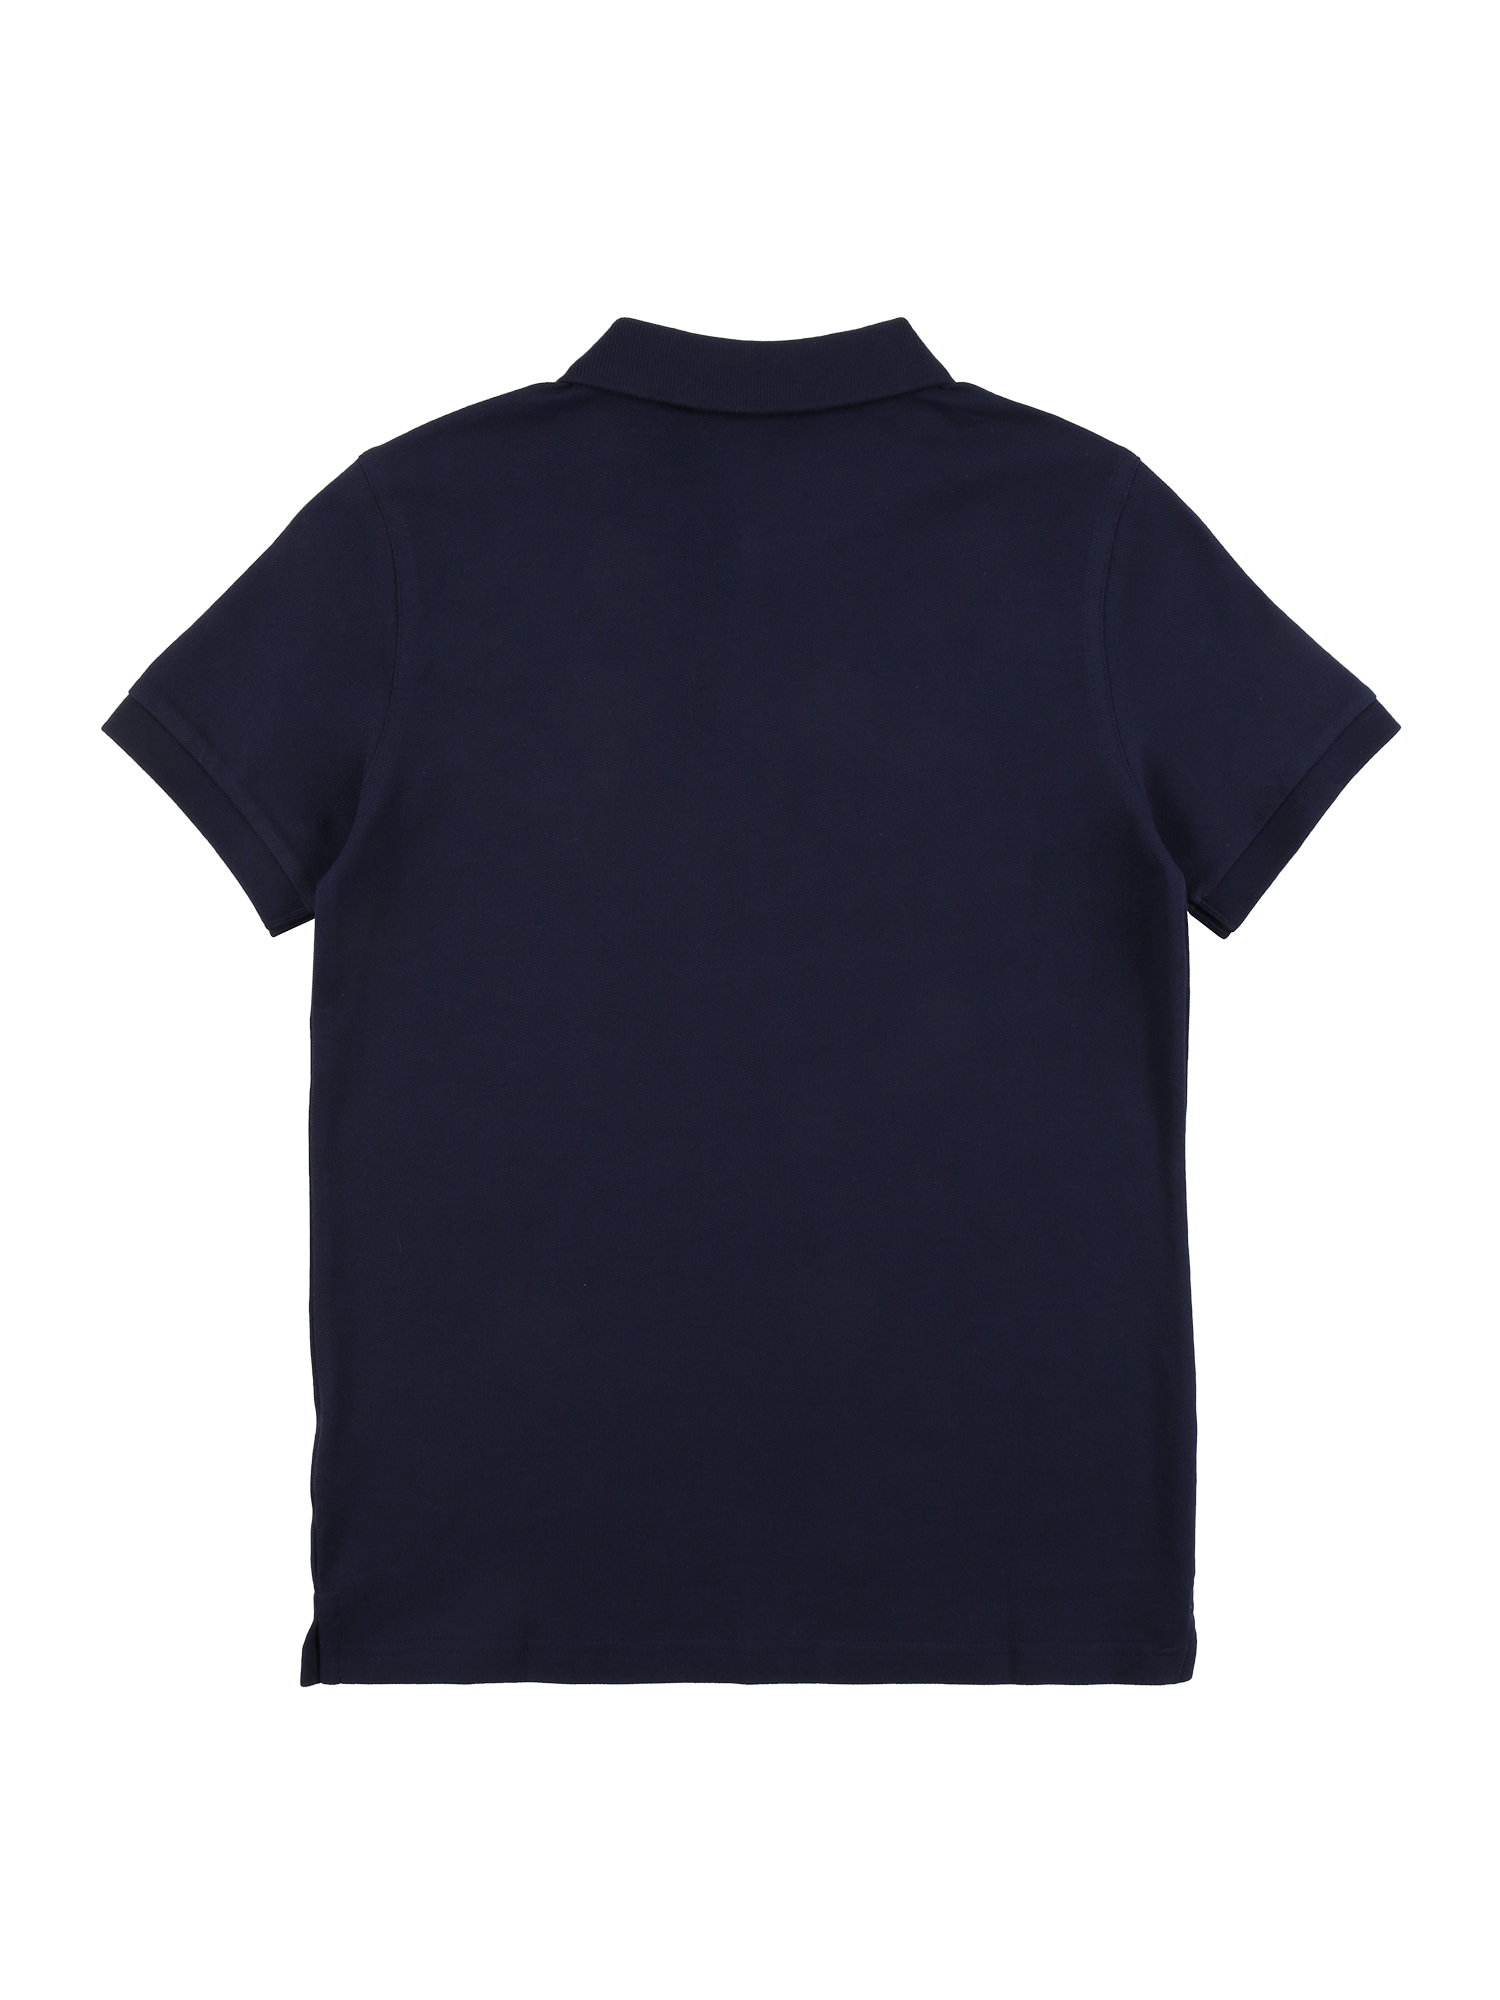 GANT Shirt  dark blue / grey / white / red